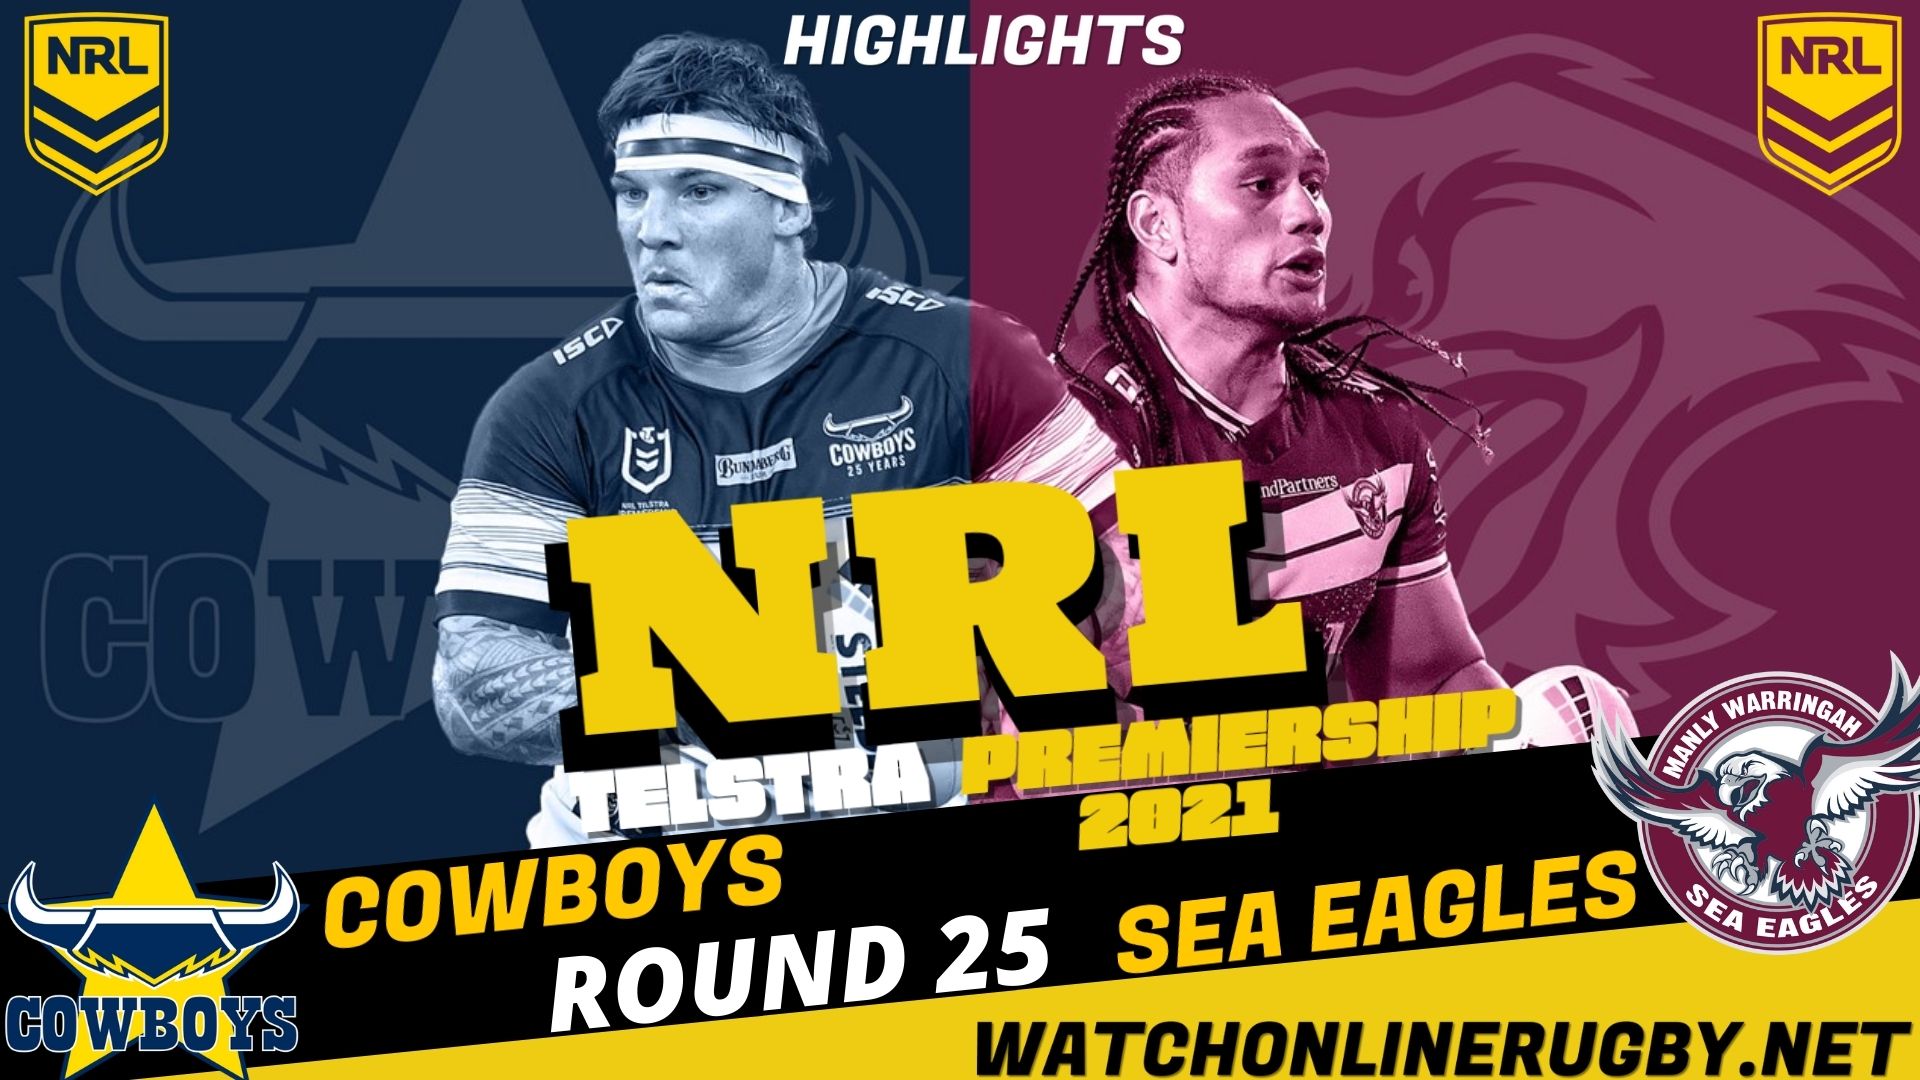 Cowboys Vs Sea Eagles Highlights RD 25 NRL Rugby